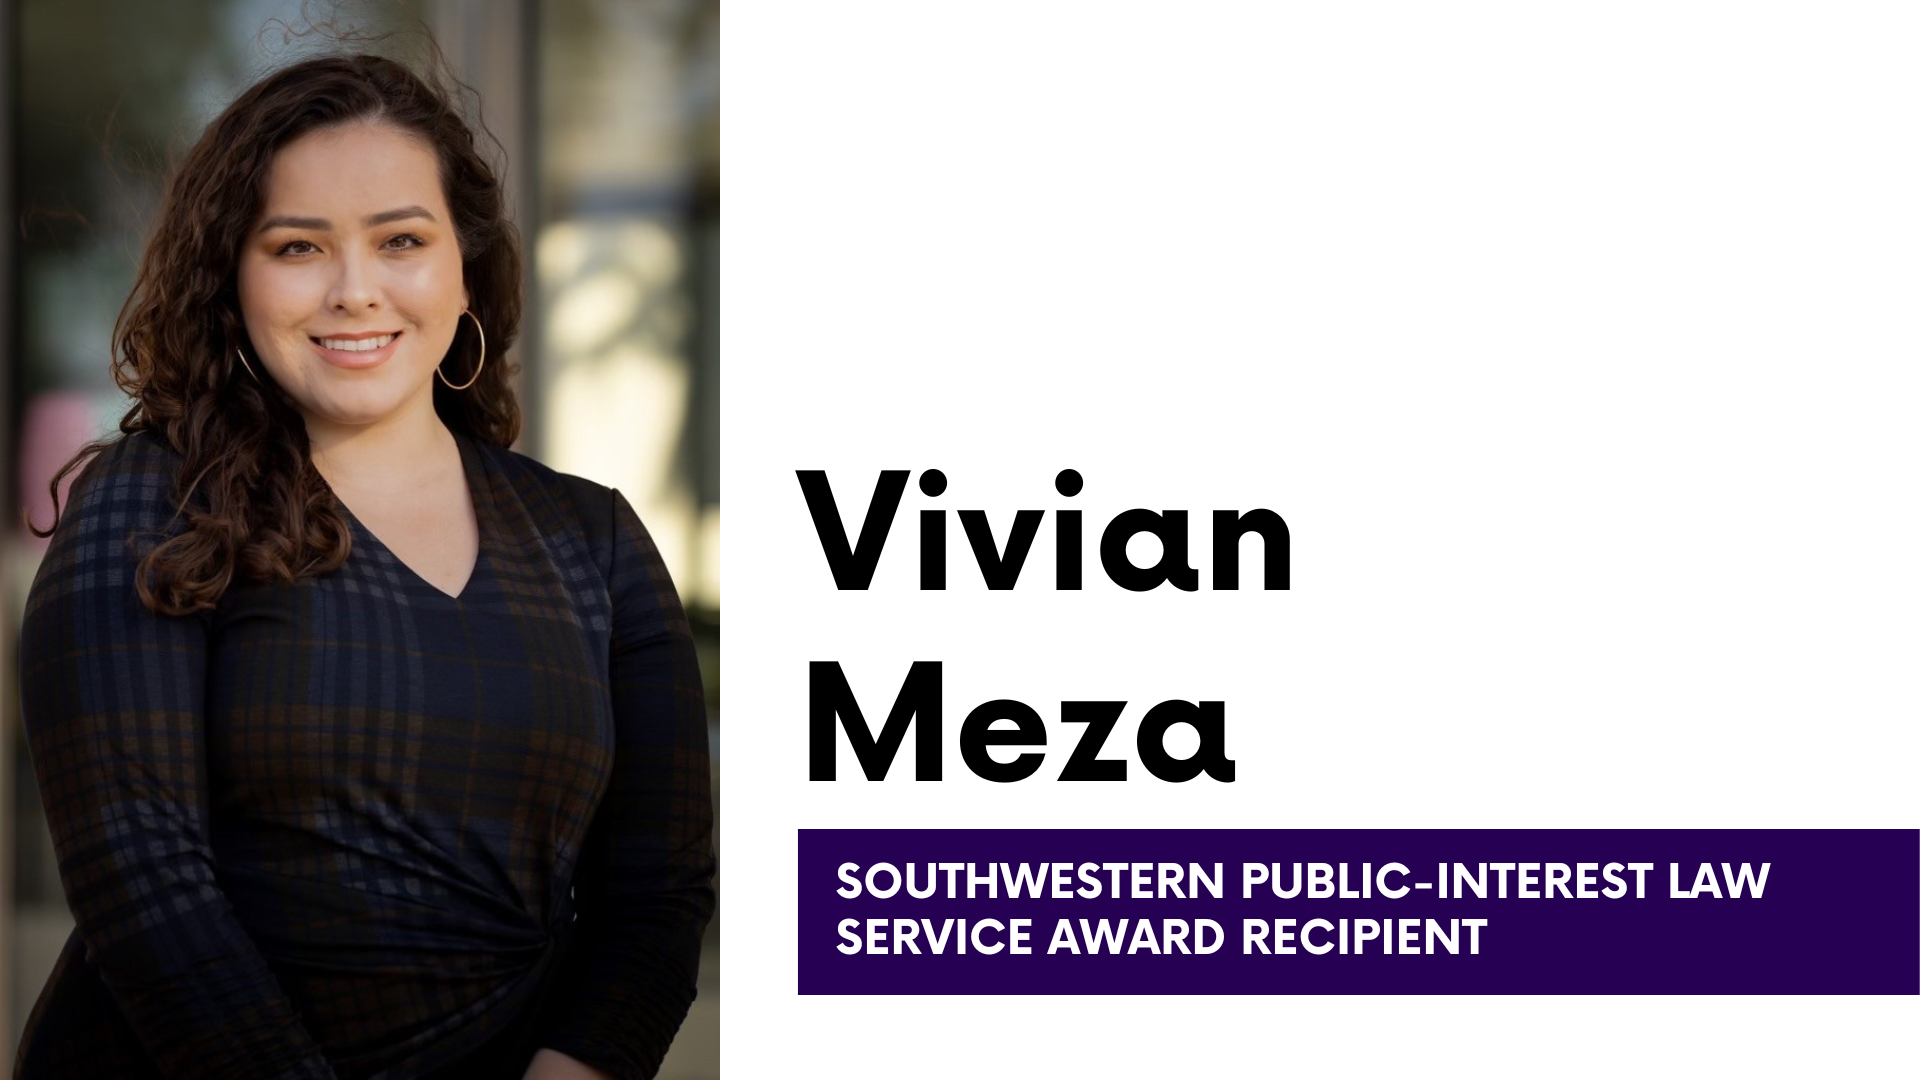 Vivian Meza headshot with text: Vivian Meza Southwestern Public-Interest Law Service Award Recipient